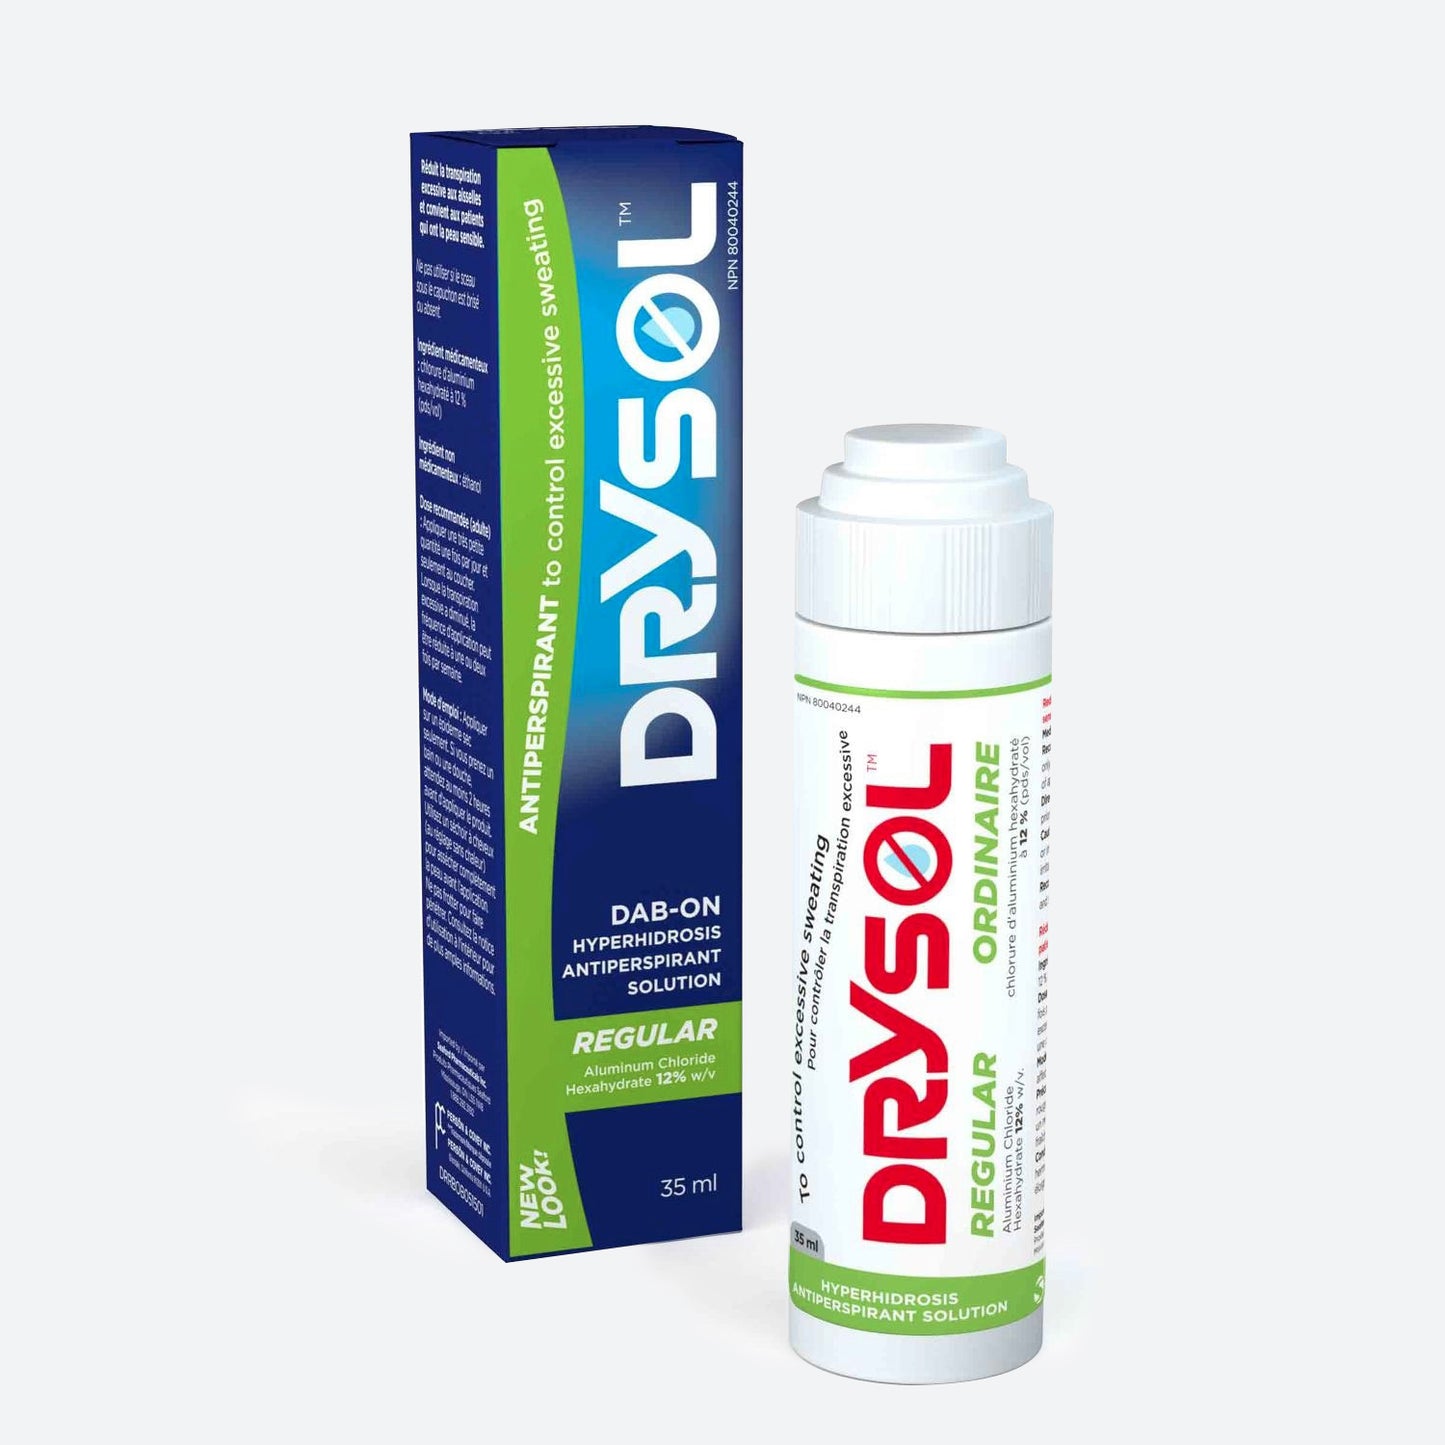 Drysol Dab On - DRYSOL® REGULAR 12% ACH DAB ON, 35ML - Shop at DrysolDepot.com